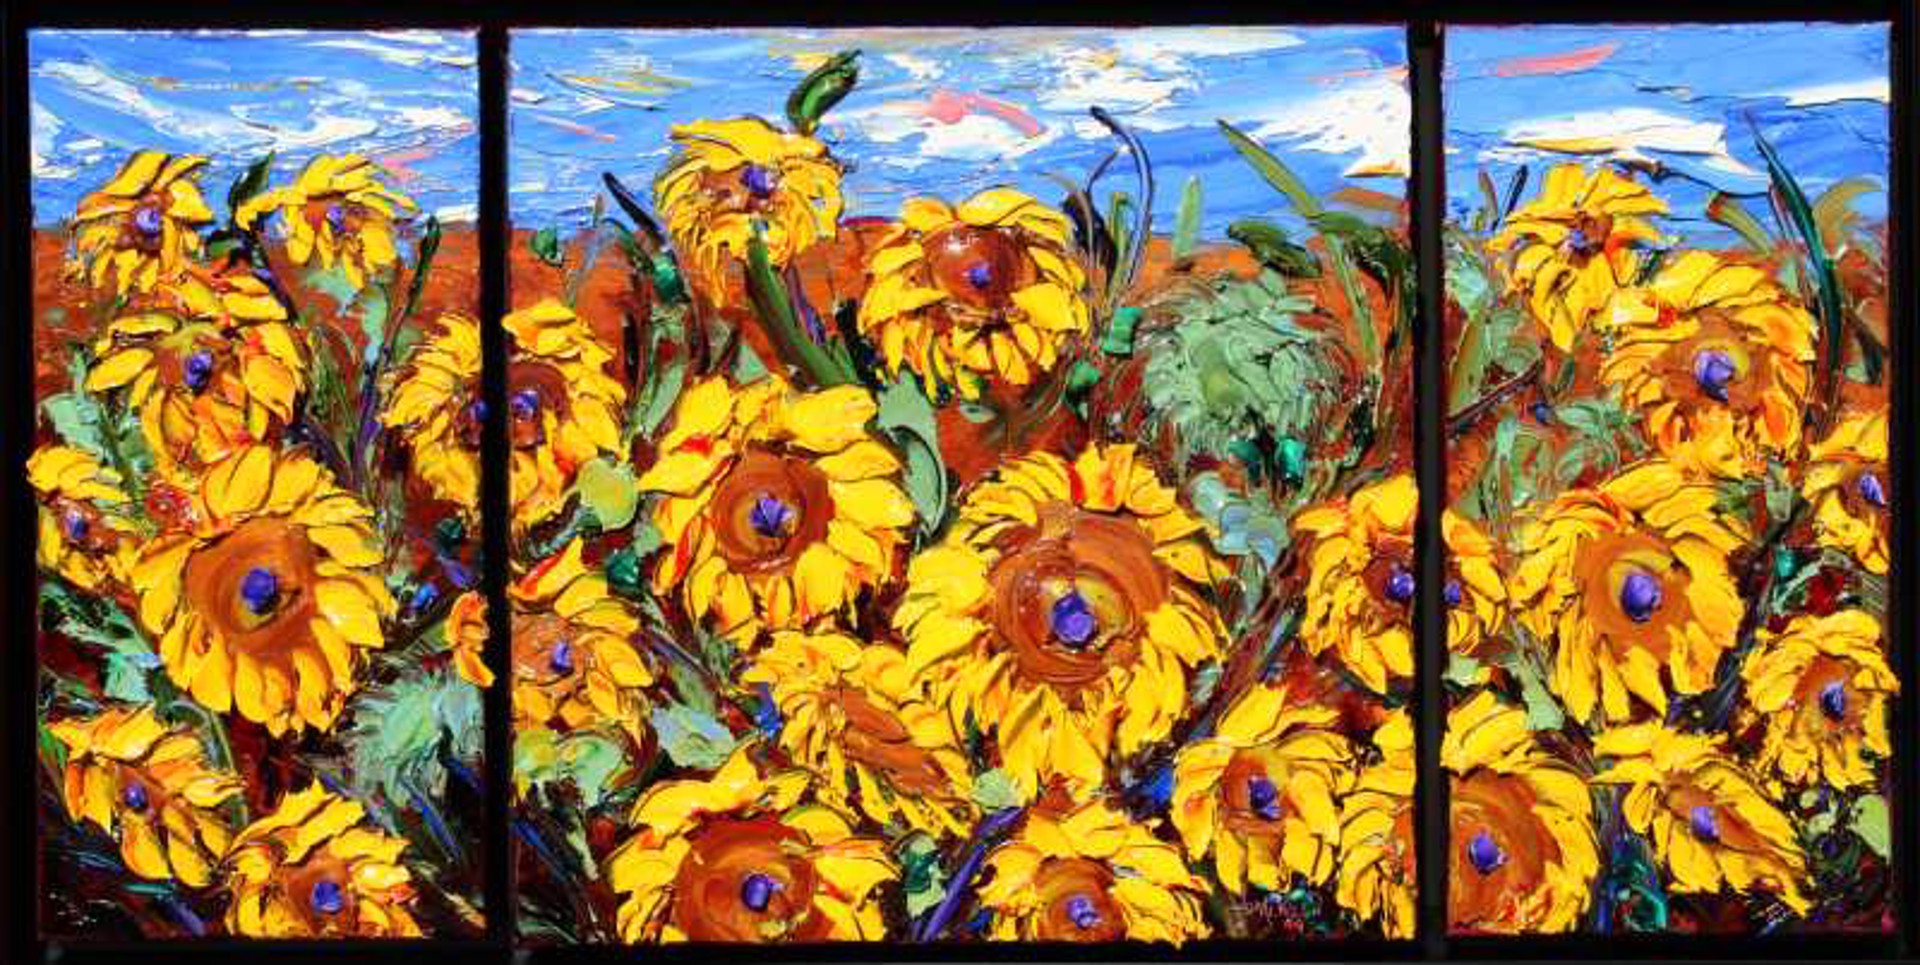 Sunflower Sunrise Triptych by JD Miller